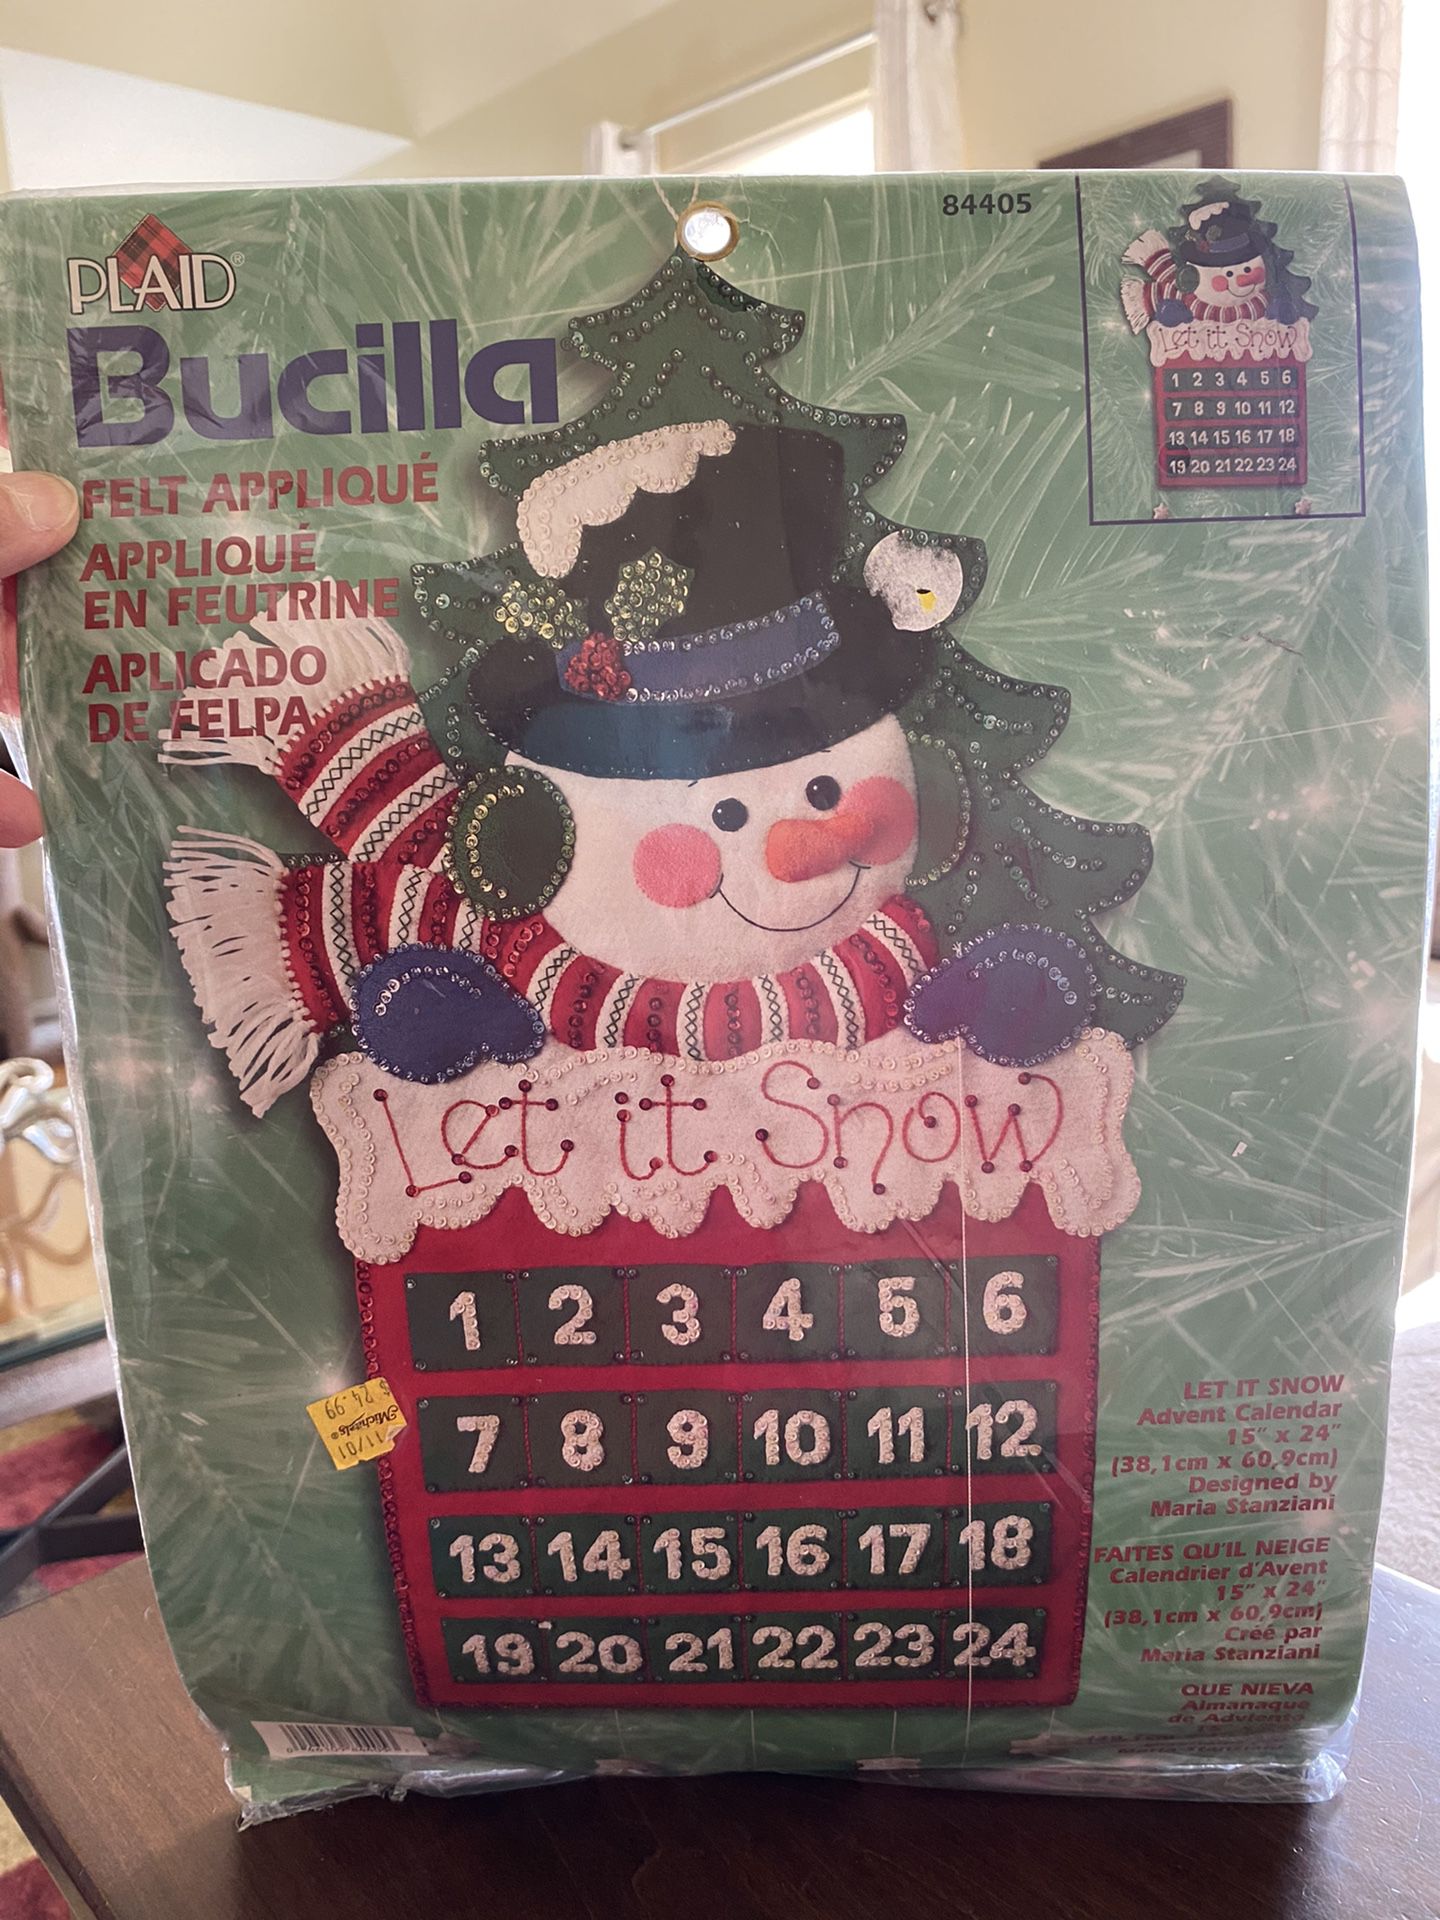 Advent Calendar Kit